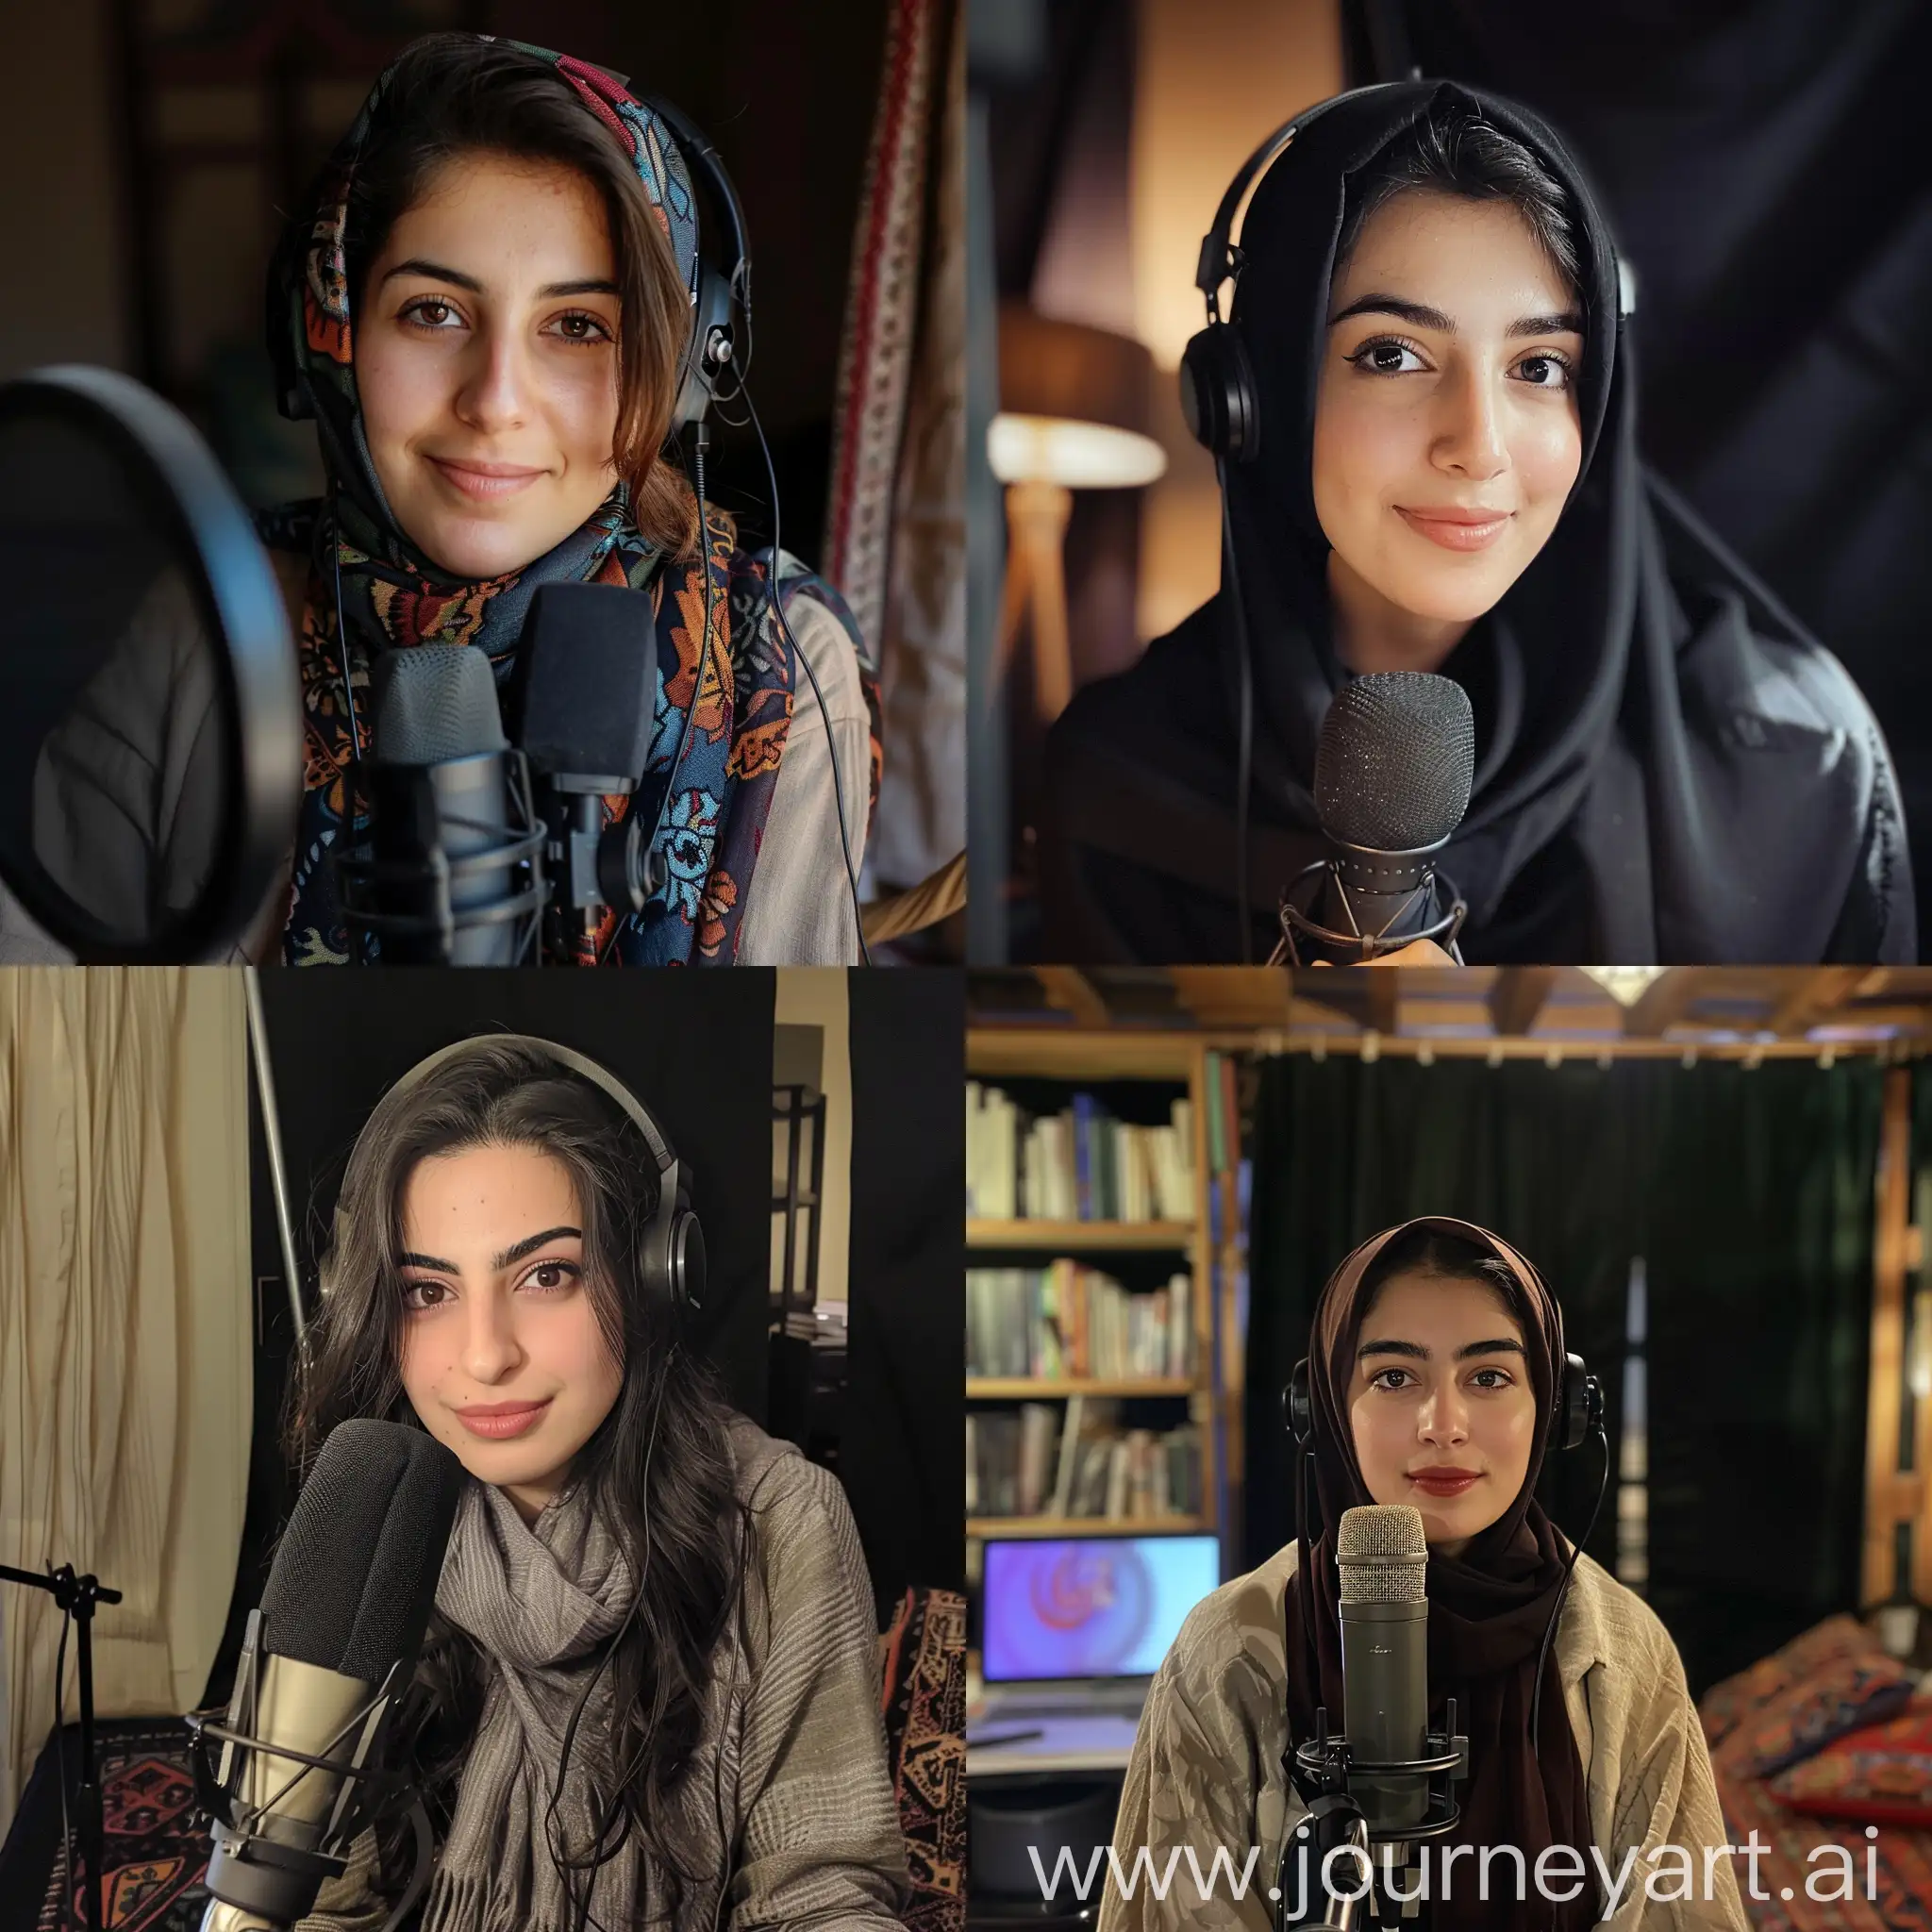 Iranian-Podcast-Host-Portrait-A-Modern-Representation-of-Cultural-Diversity